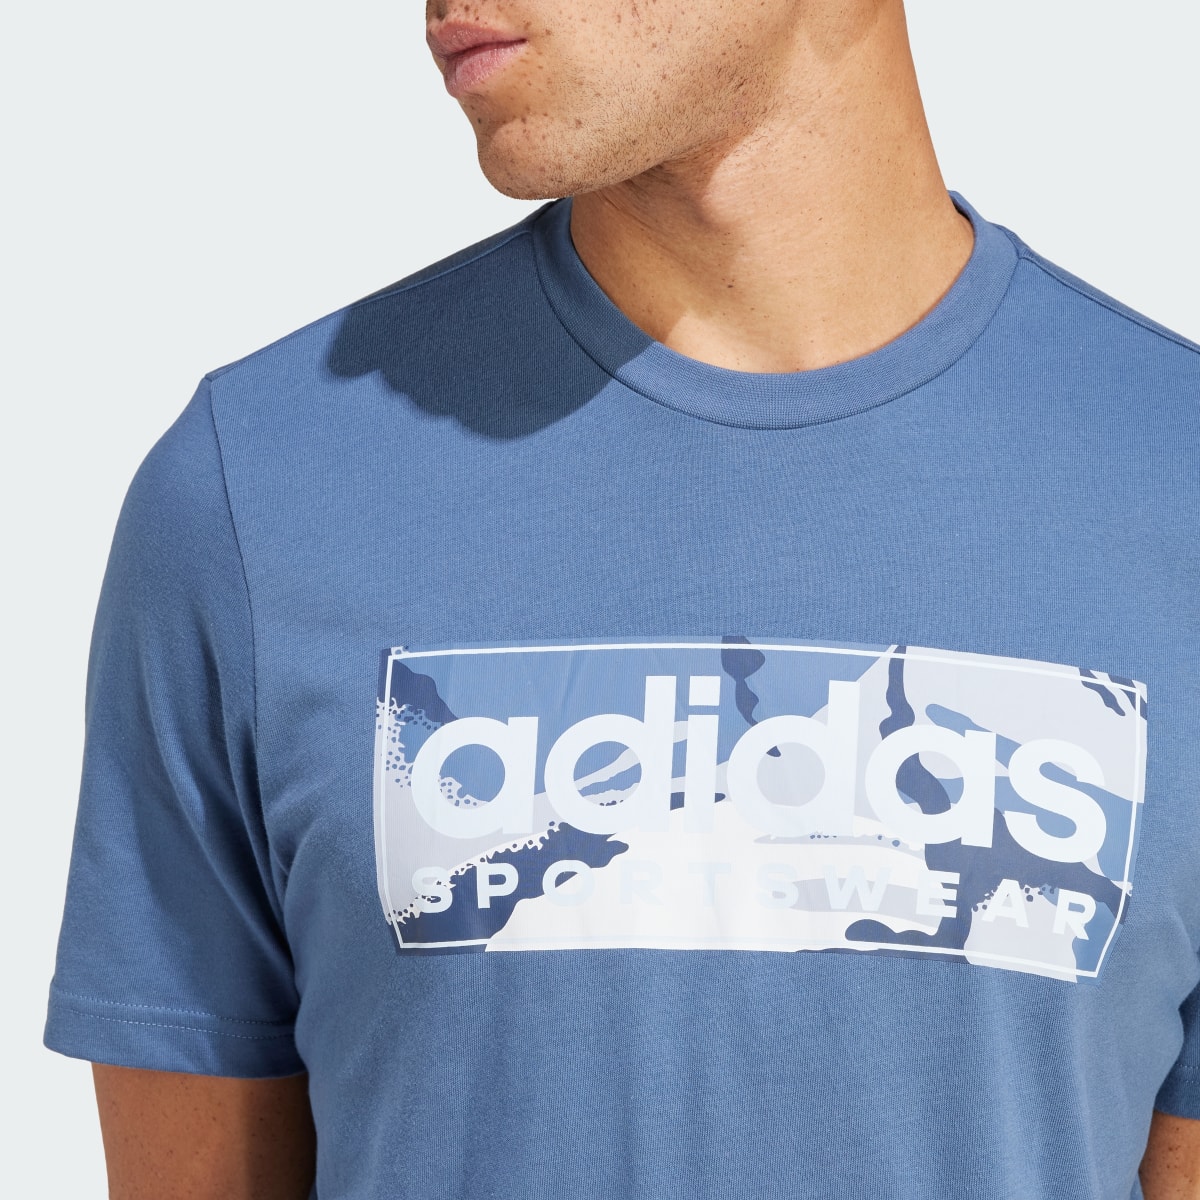 Adidas Camo Linear Graphic T-Shirt. 6